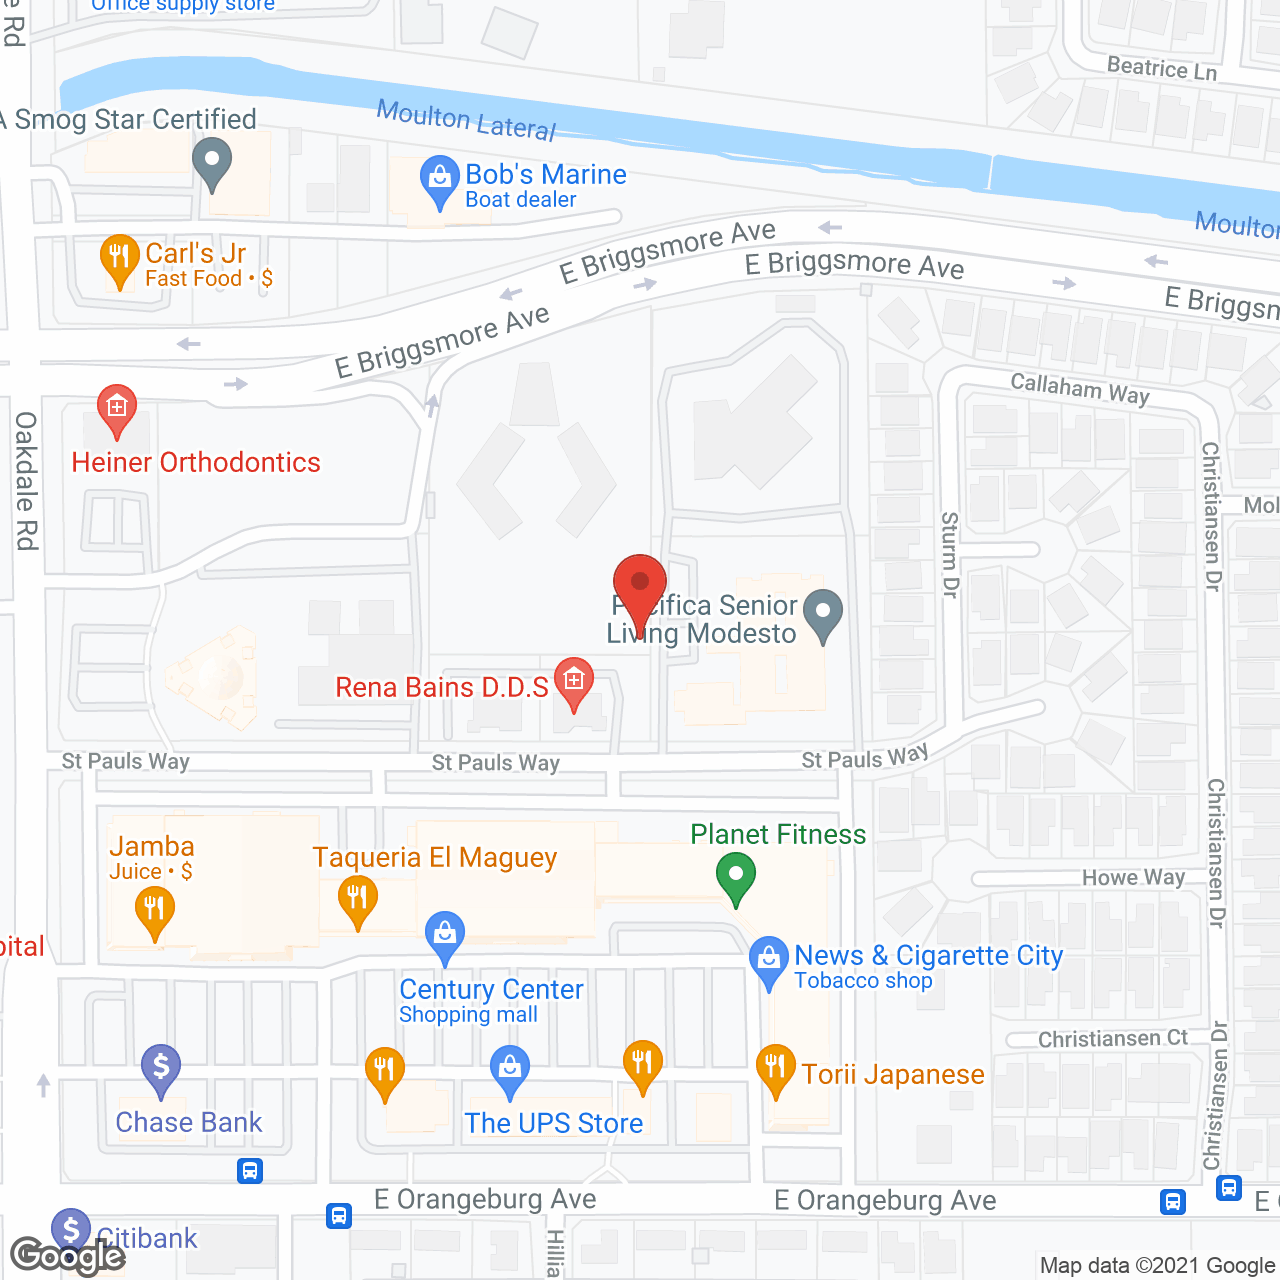 The Gardens of Modesto in google map